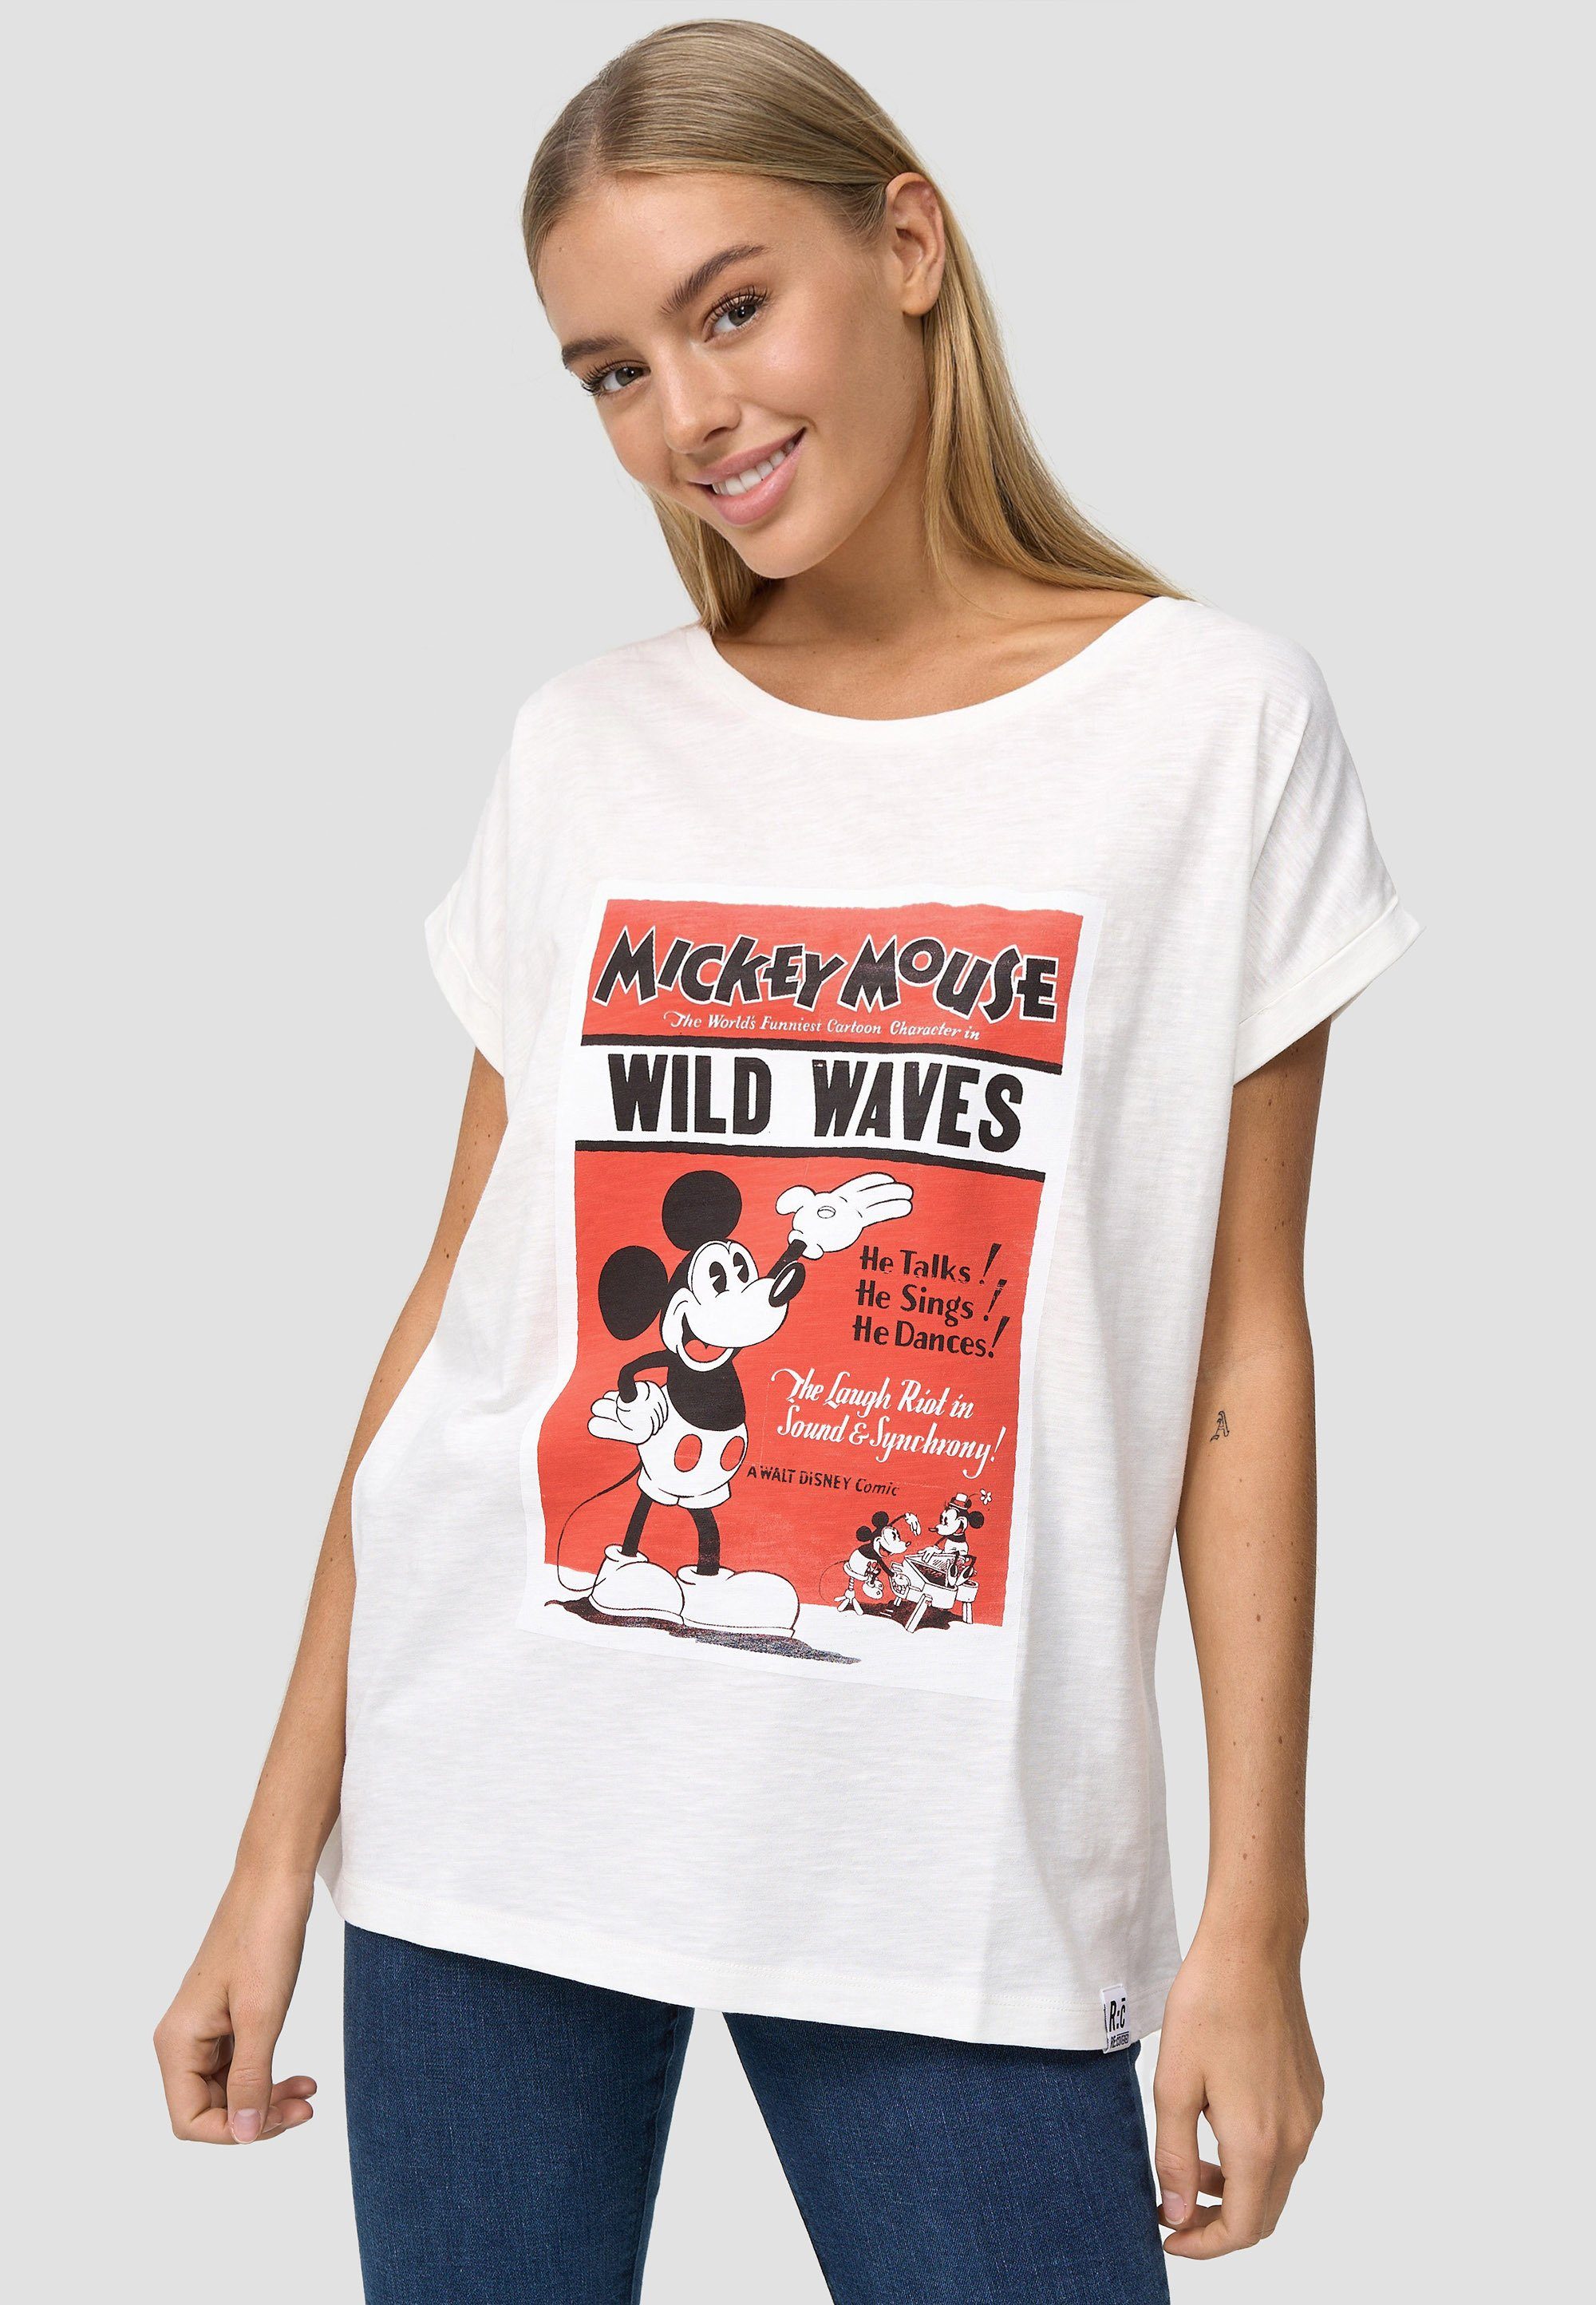 T-Shirt Bio-Baumwolle GOTS zertifizierte Waves Mickey Mouse Wild Recovered